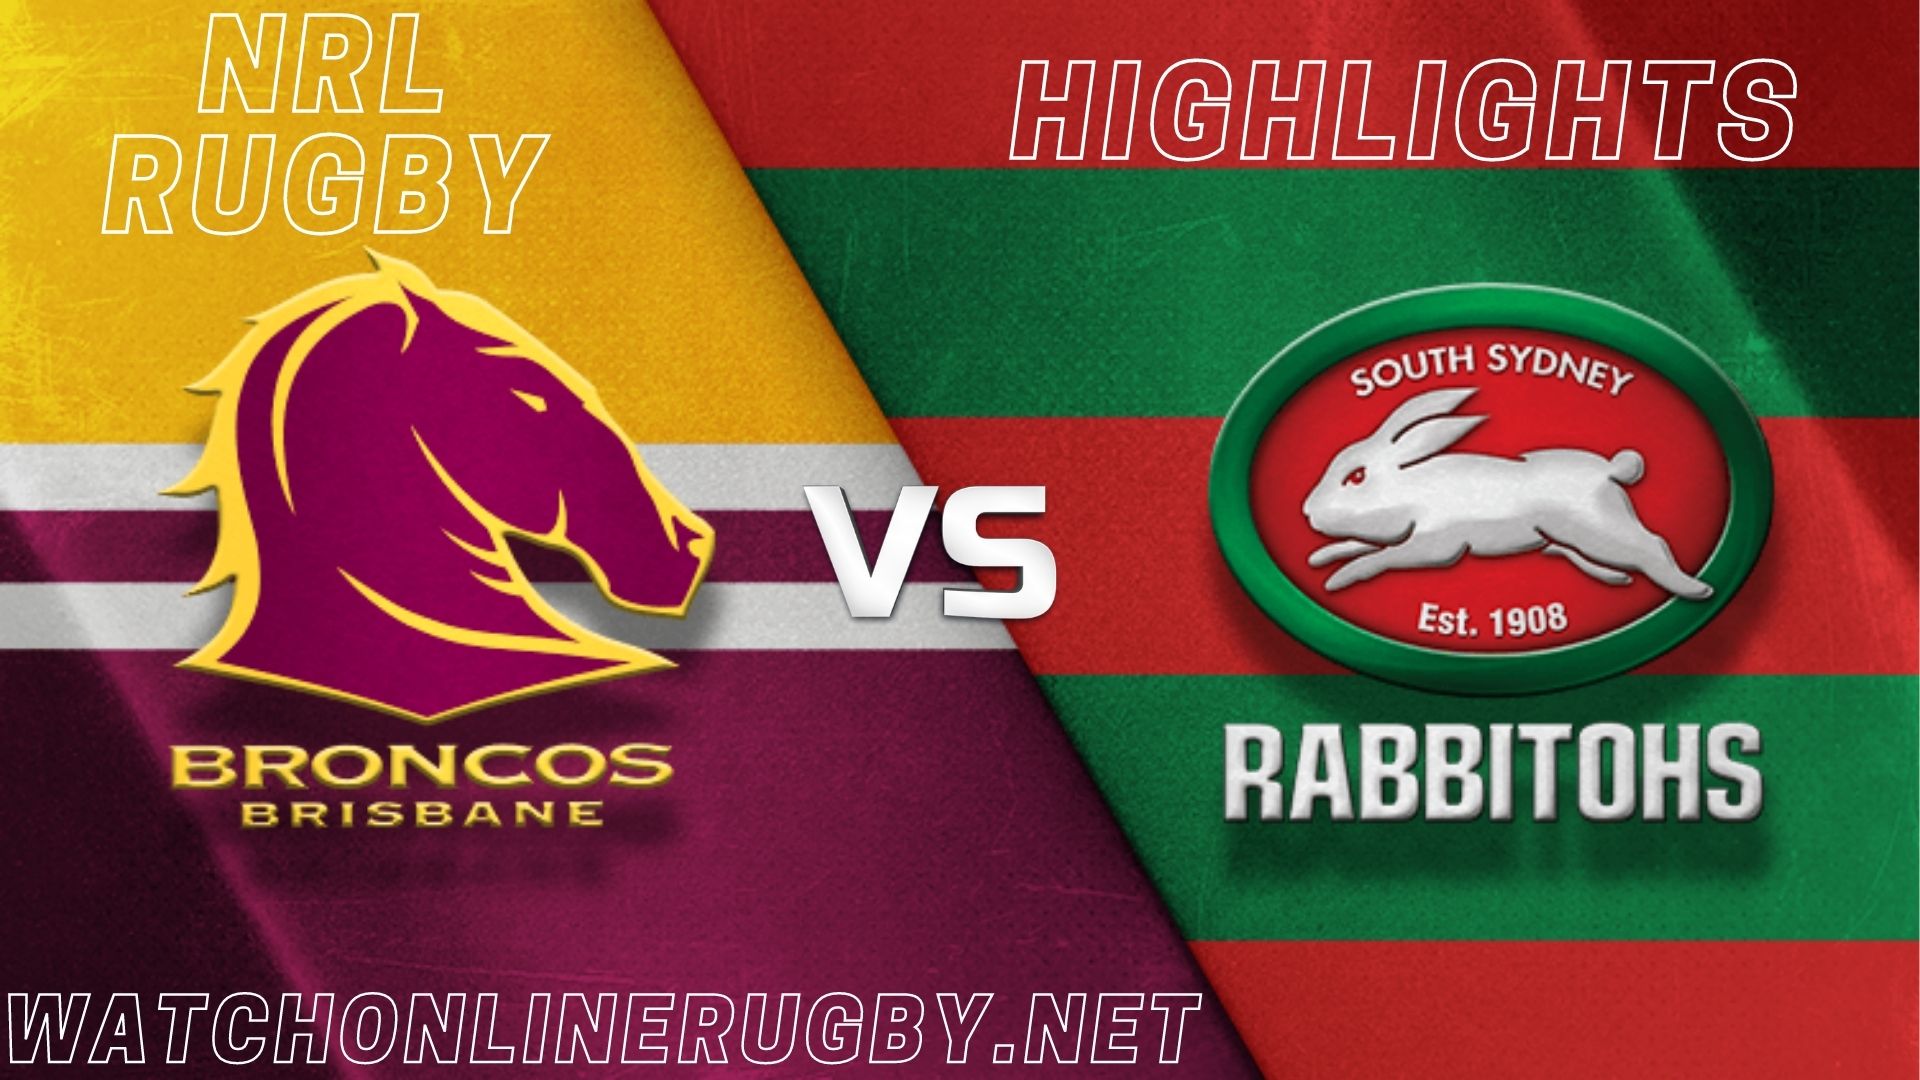 Broncos Vs Rabbitohs Highlights RD 1 NRL Rugby